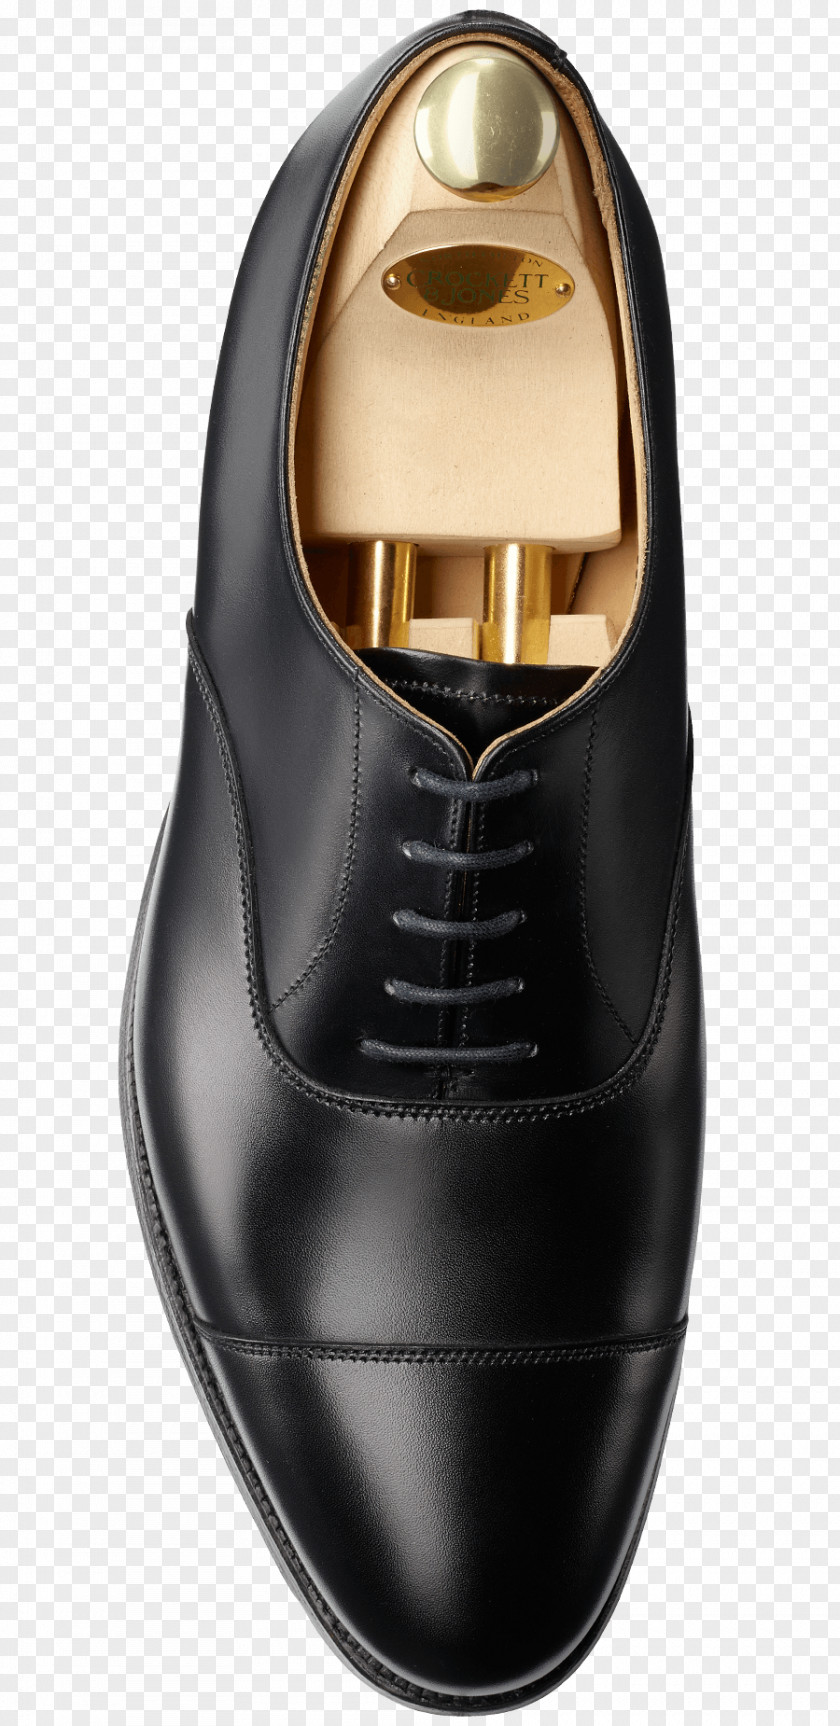 Goodyear Welt Slip-on Shoe Dress Oxford Crockett & Jones PNG